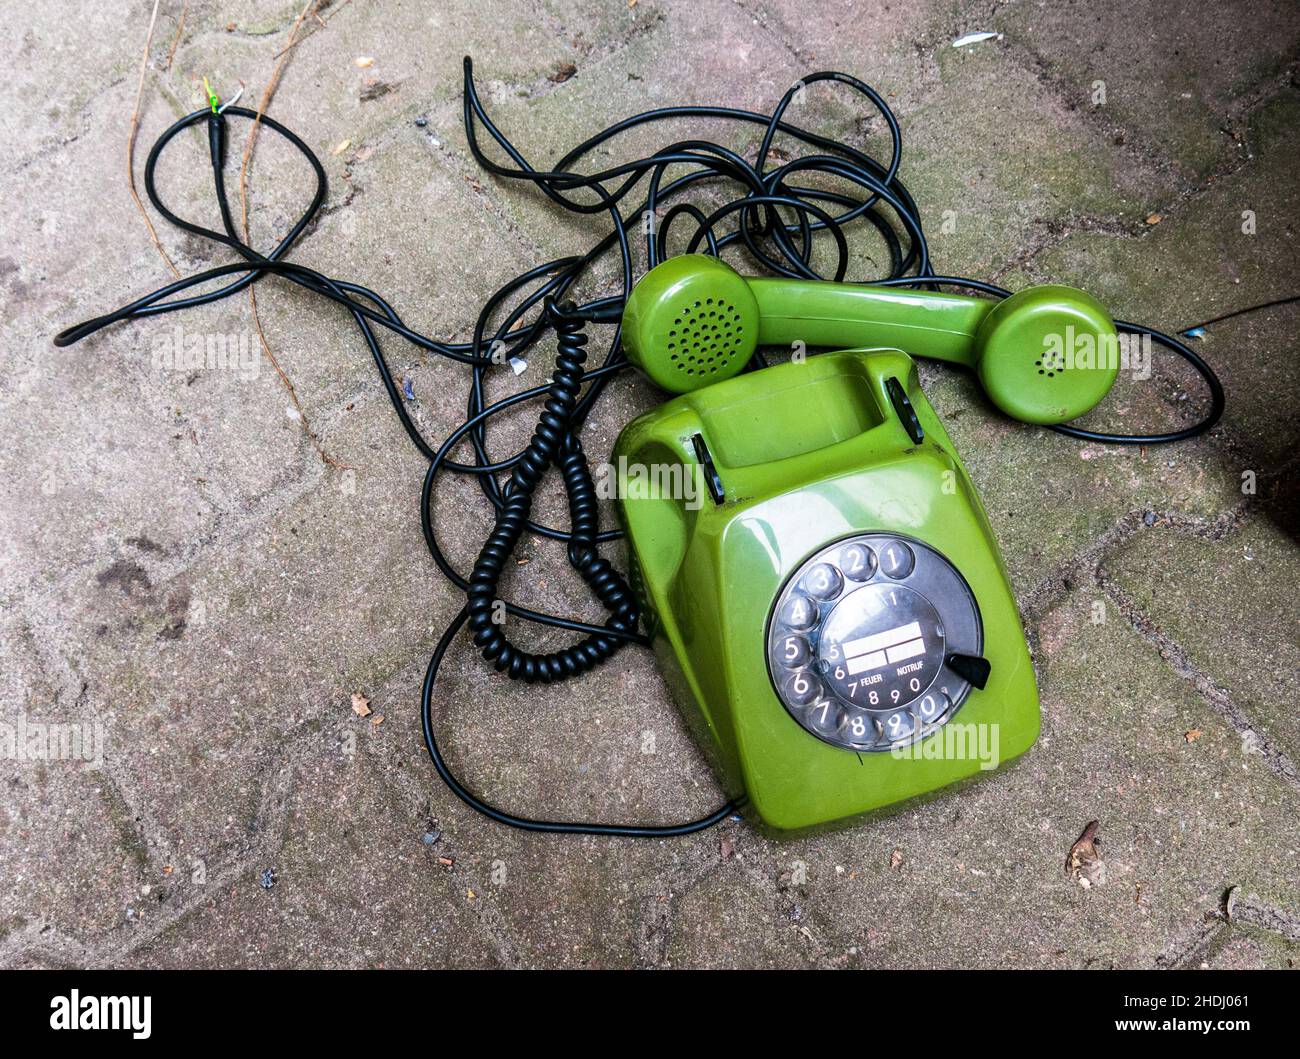 telephone, retro, phone, phones, telephones, old fashioned, retro style Stock Photo